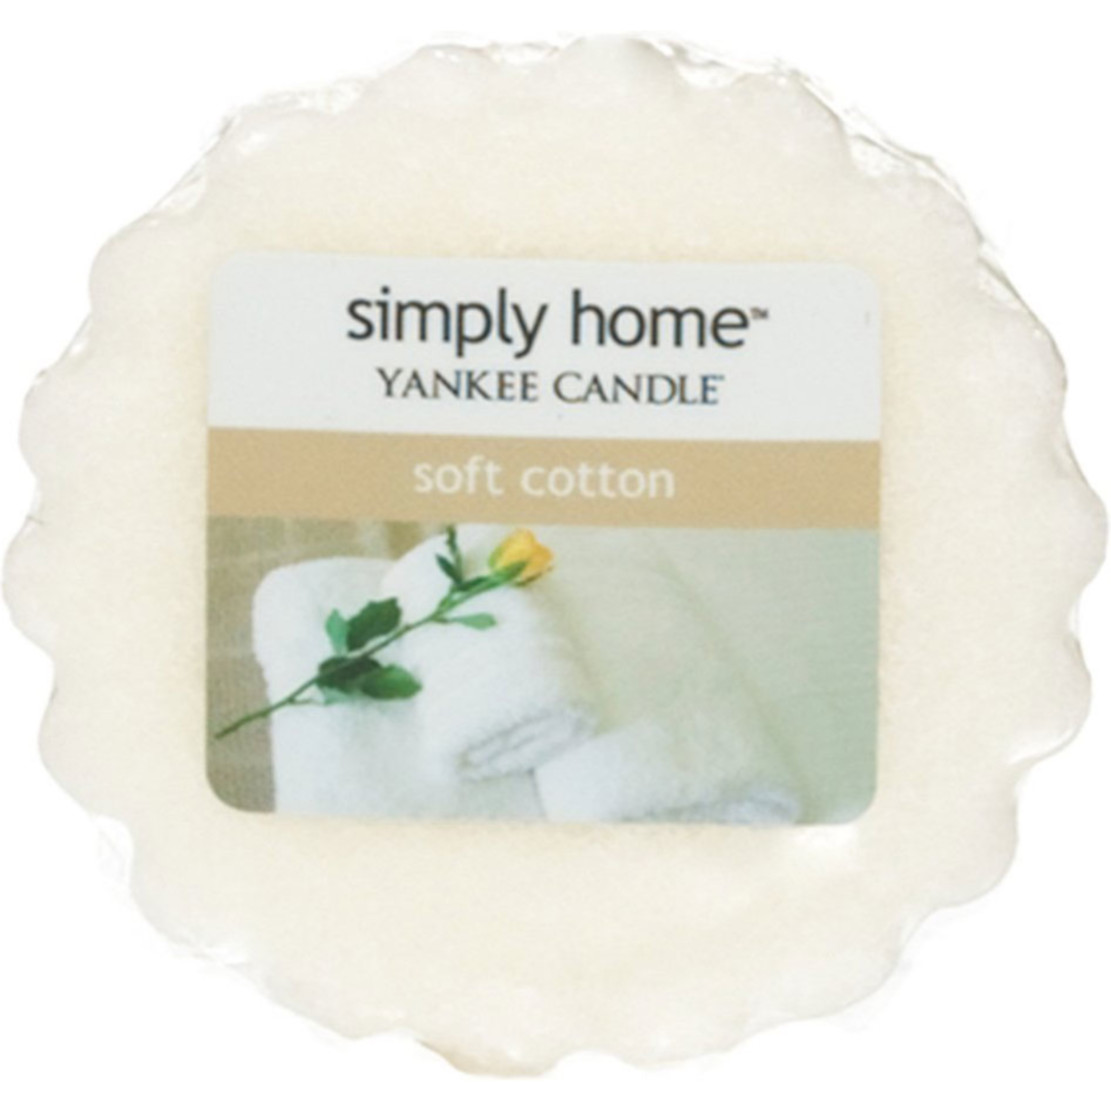 Yankee Candle Soft Cotton Wax Melt Tart